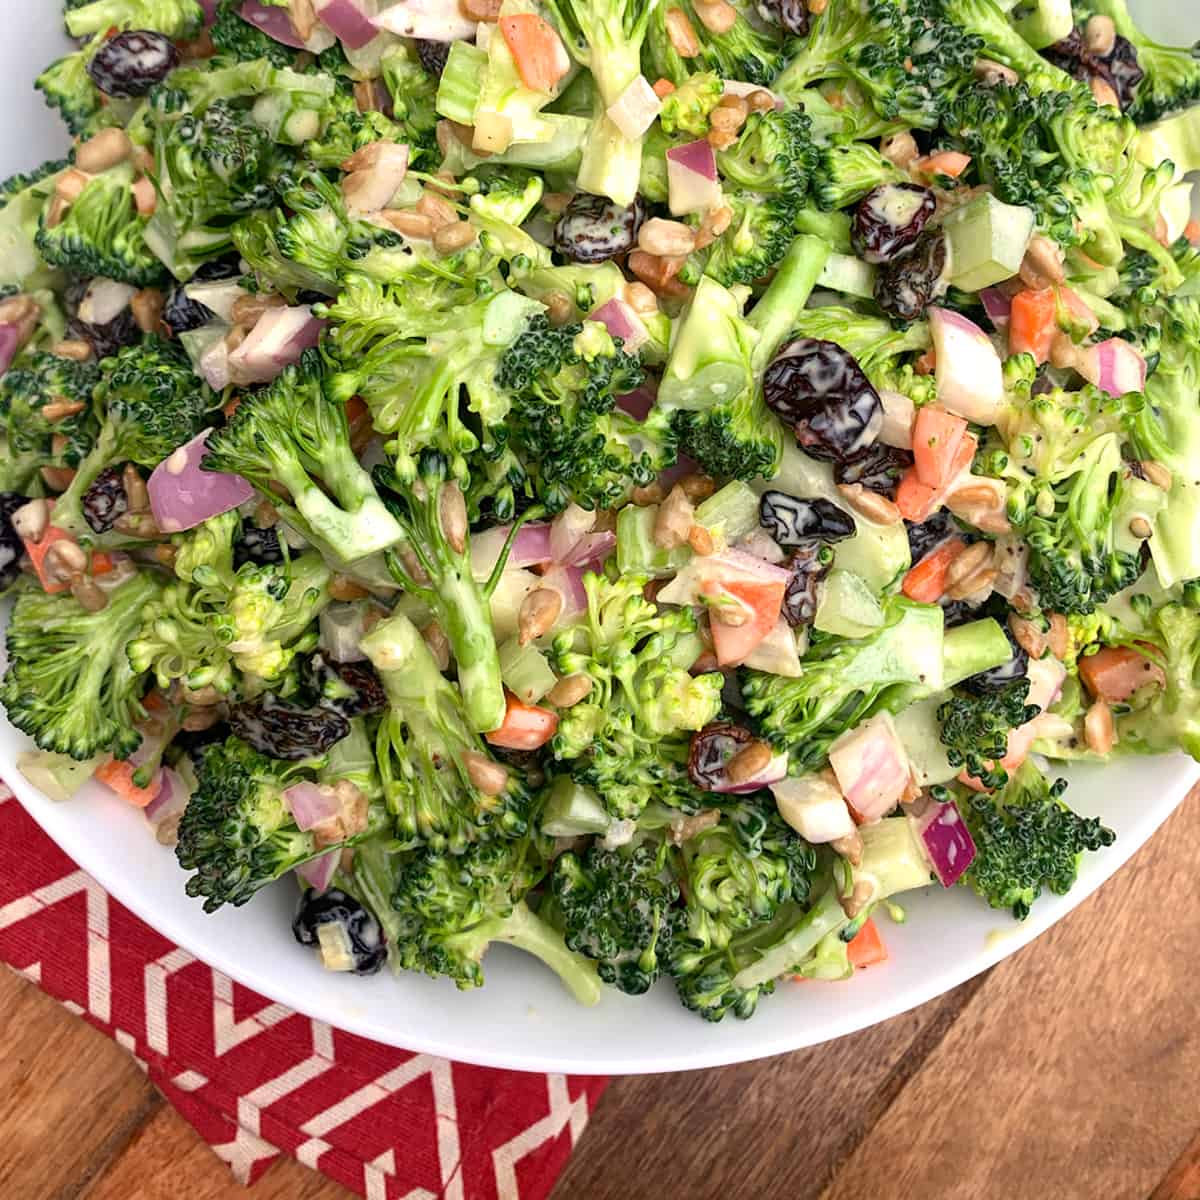 Deli Style Broccoli Salad